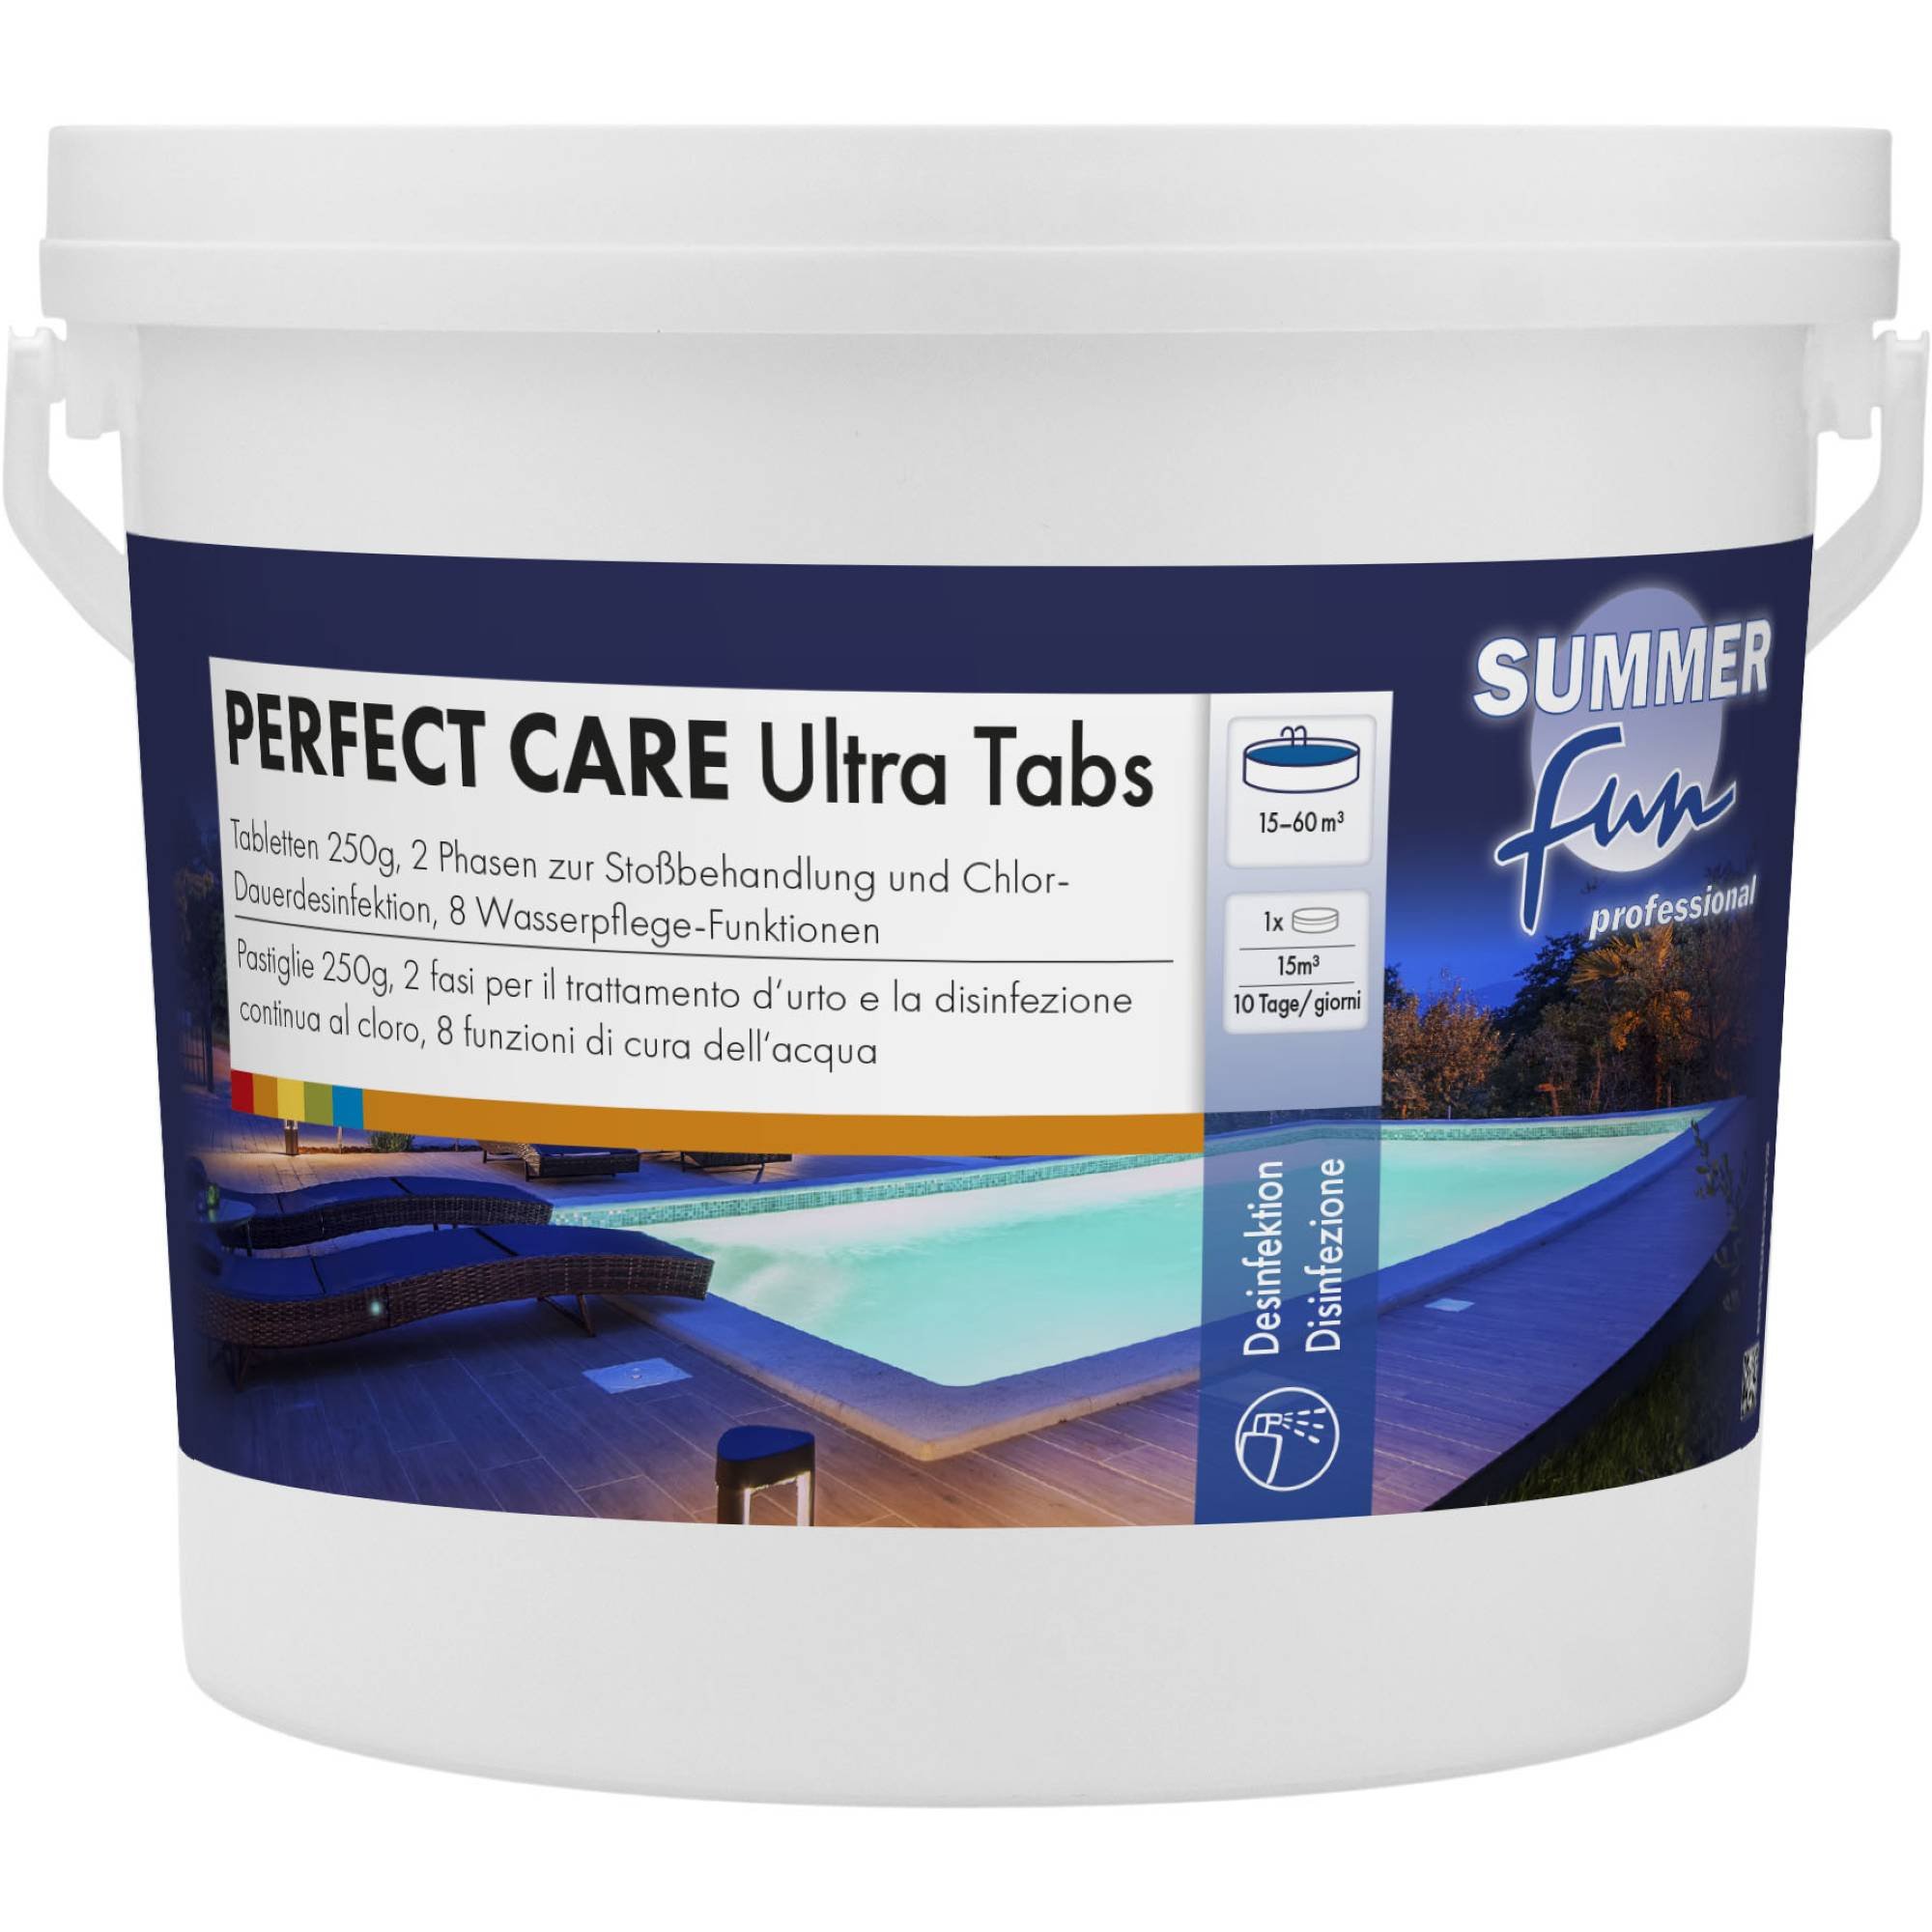 Summer Fun - Perfect Care Ultra Tabs - 250g Tabletten, 2,5 kg